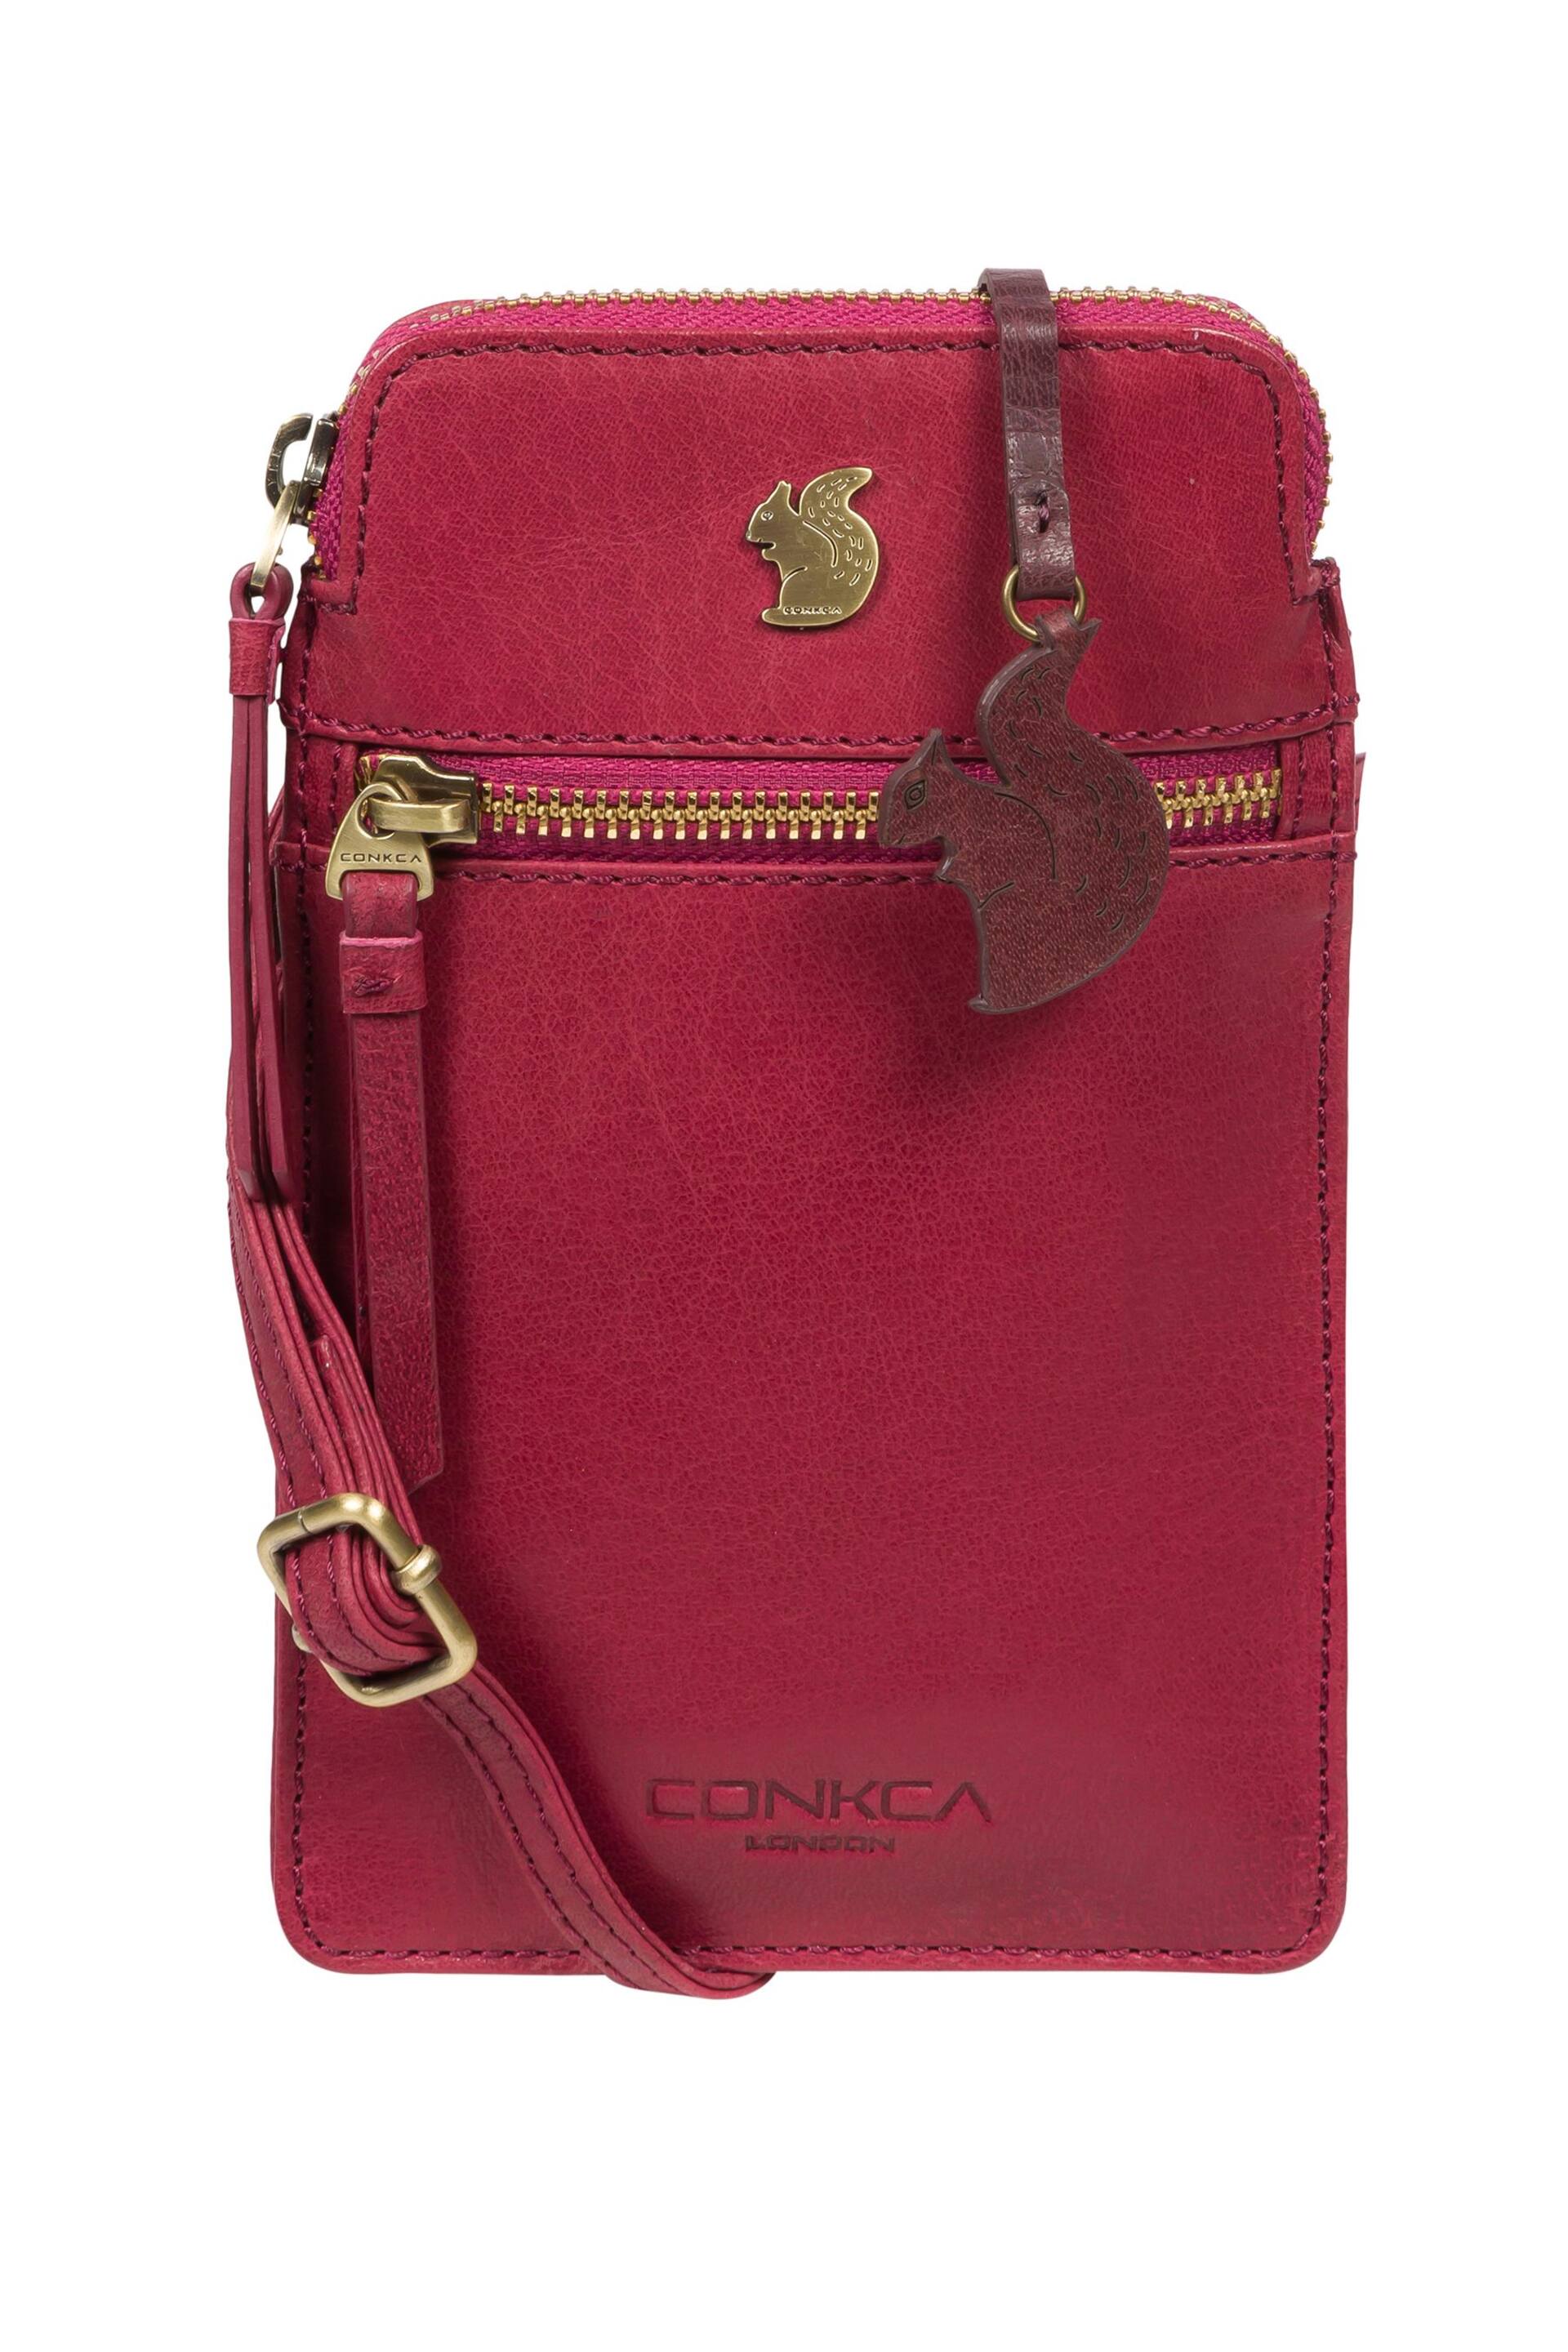 Conkca Bambino Leather Cross-Body Phone Bag - Image 1 of 4